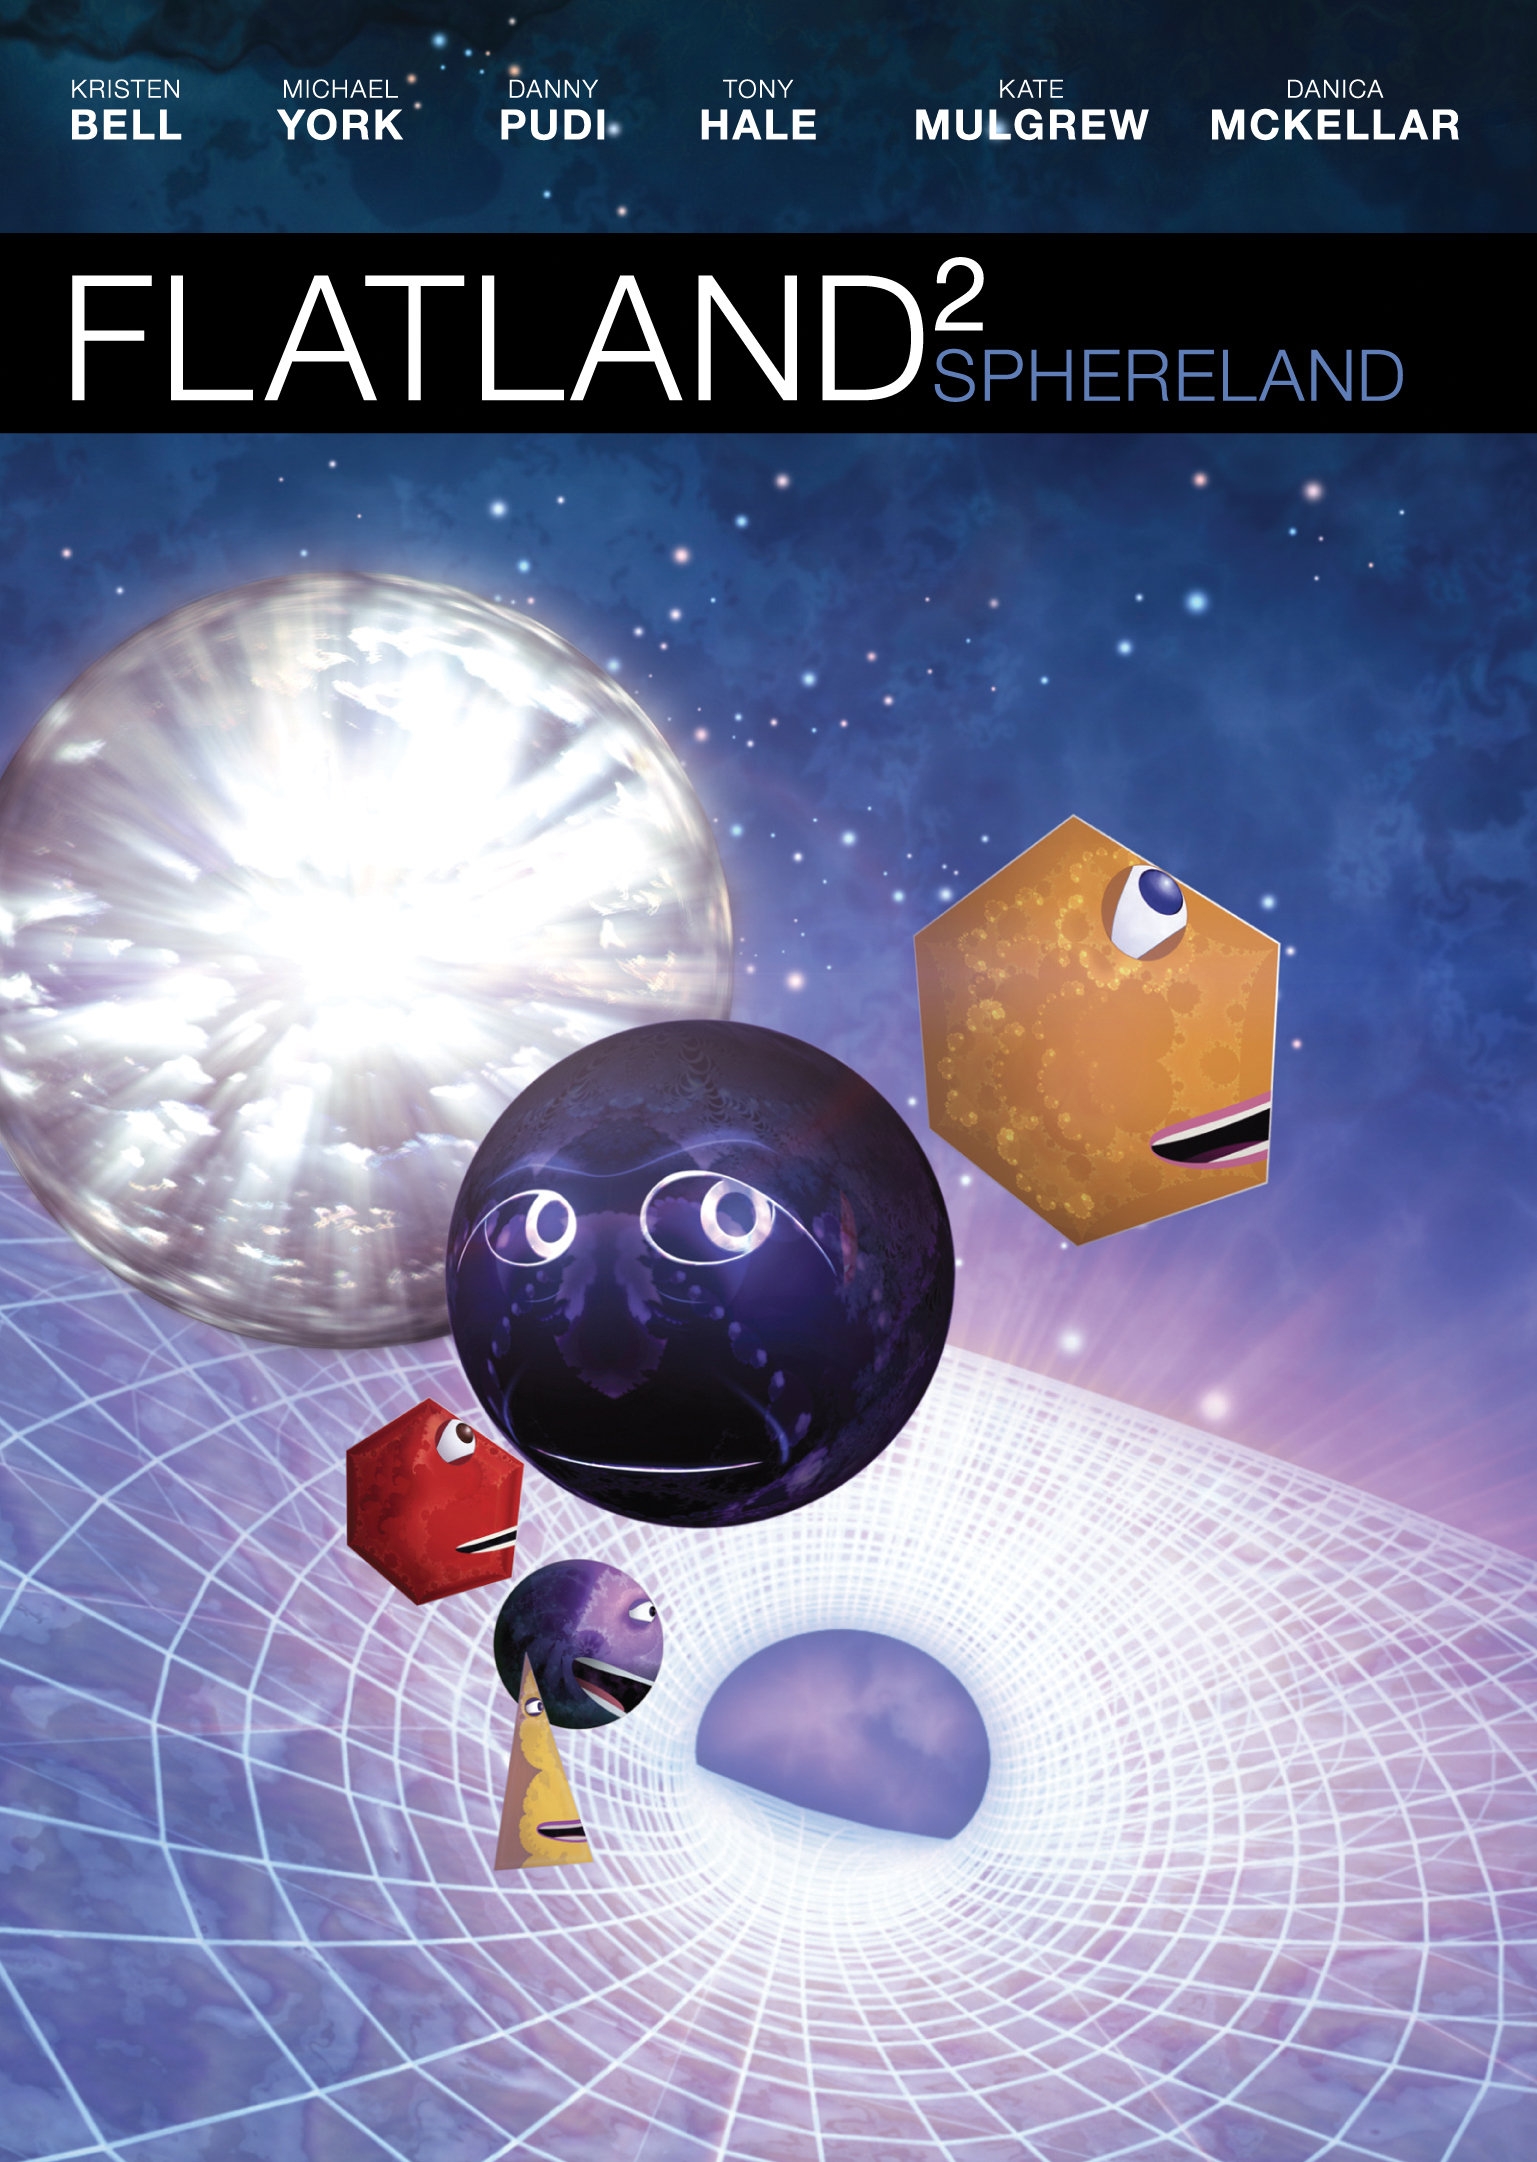 la-locandina-di-flatland-2-sphereland-371071-movieplayer-it